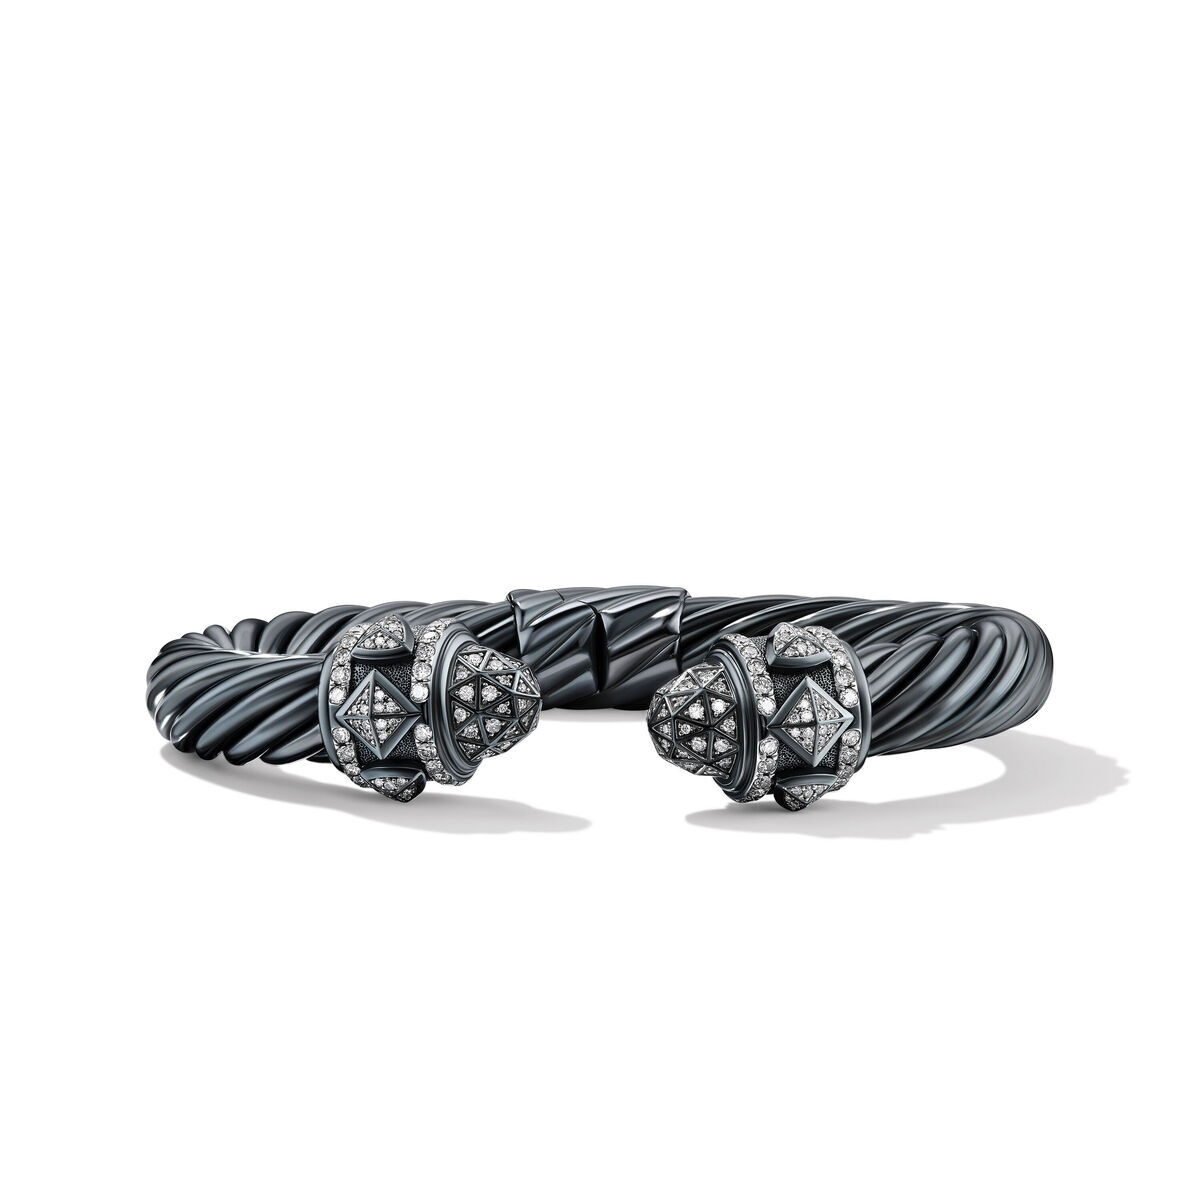 David Yurman Renaissance Bracelet in Blackened Silver with Pave Diamonds - Medium